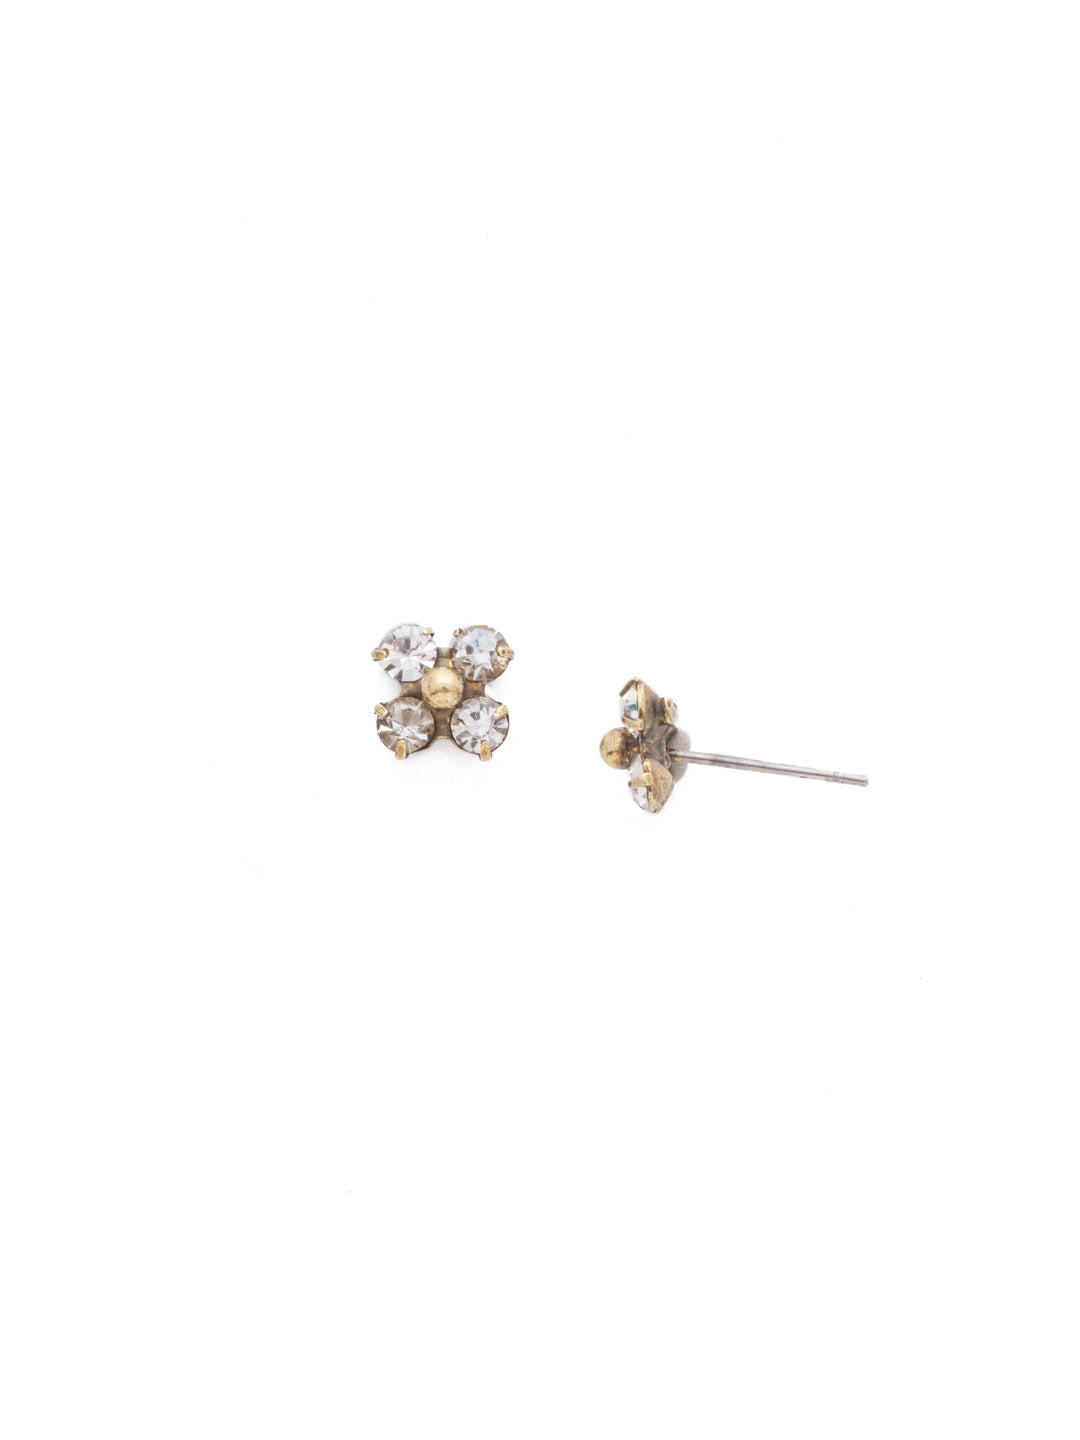 Mini Flower Post Earring Stud Earrings - EDH40AGCRY